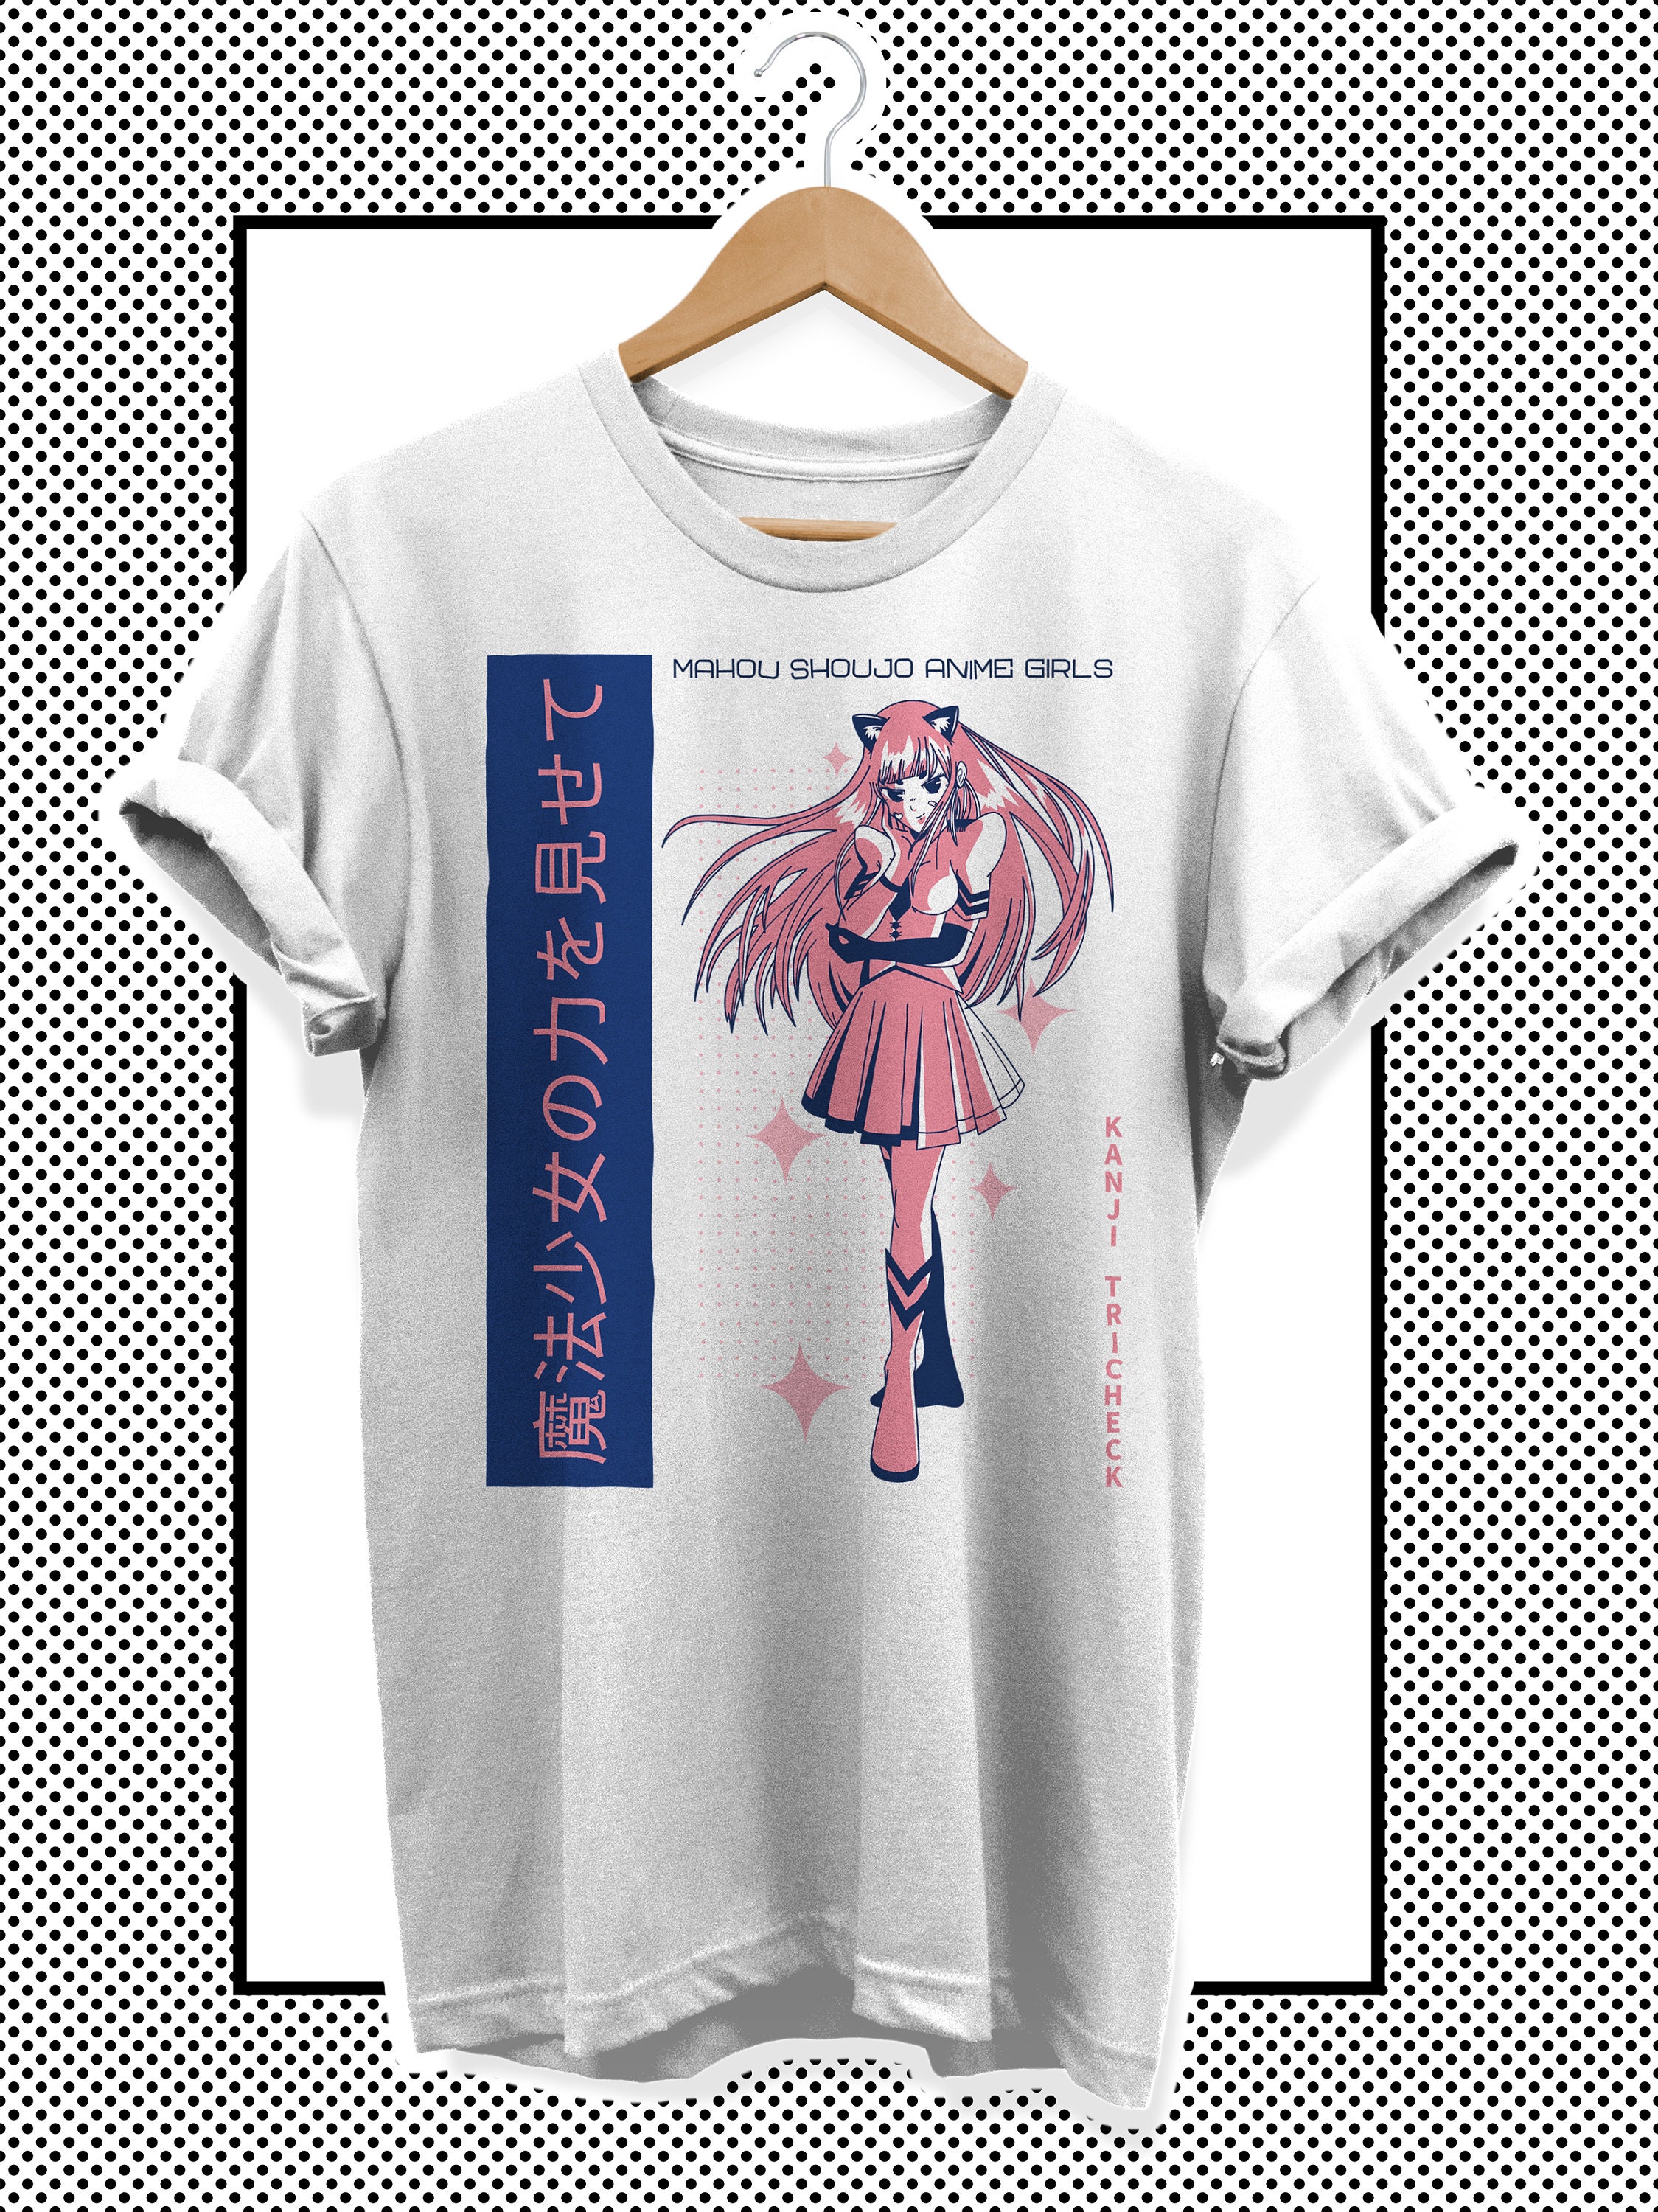 Music Notation Print T shirt Cartoon Kids Anime T-shirts Boys Girls Tops  Tee Children Summer Harajuku Short Sleeves Clothes